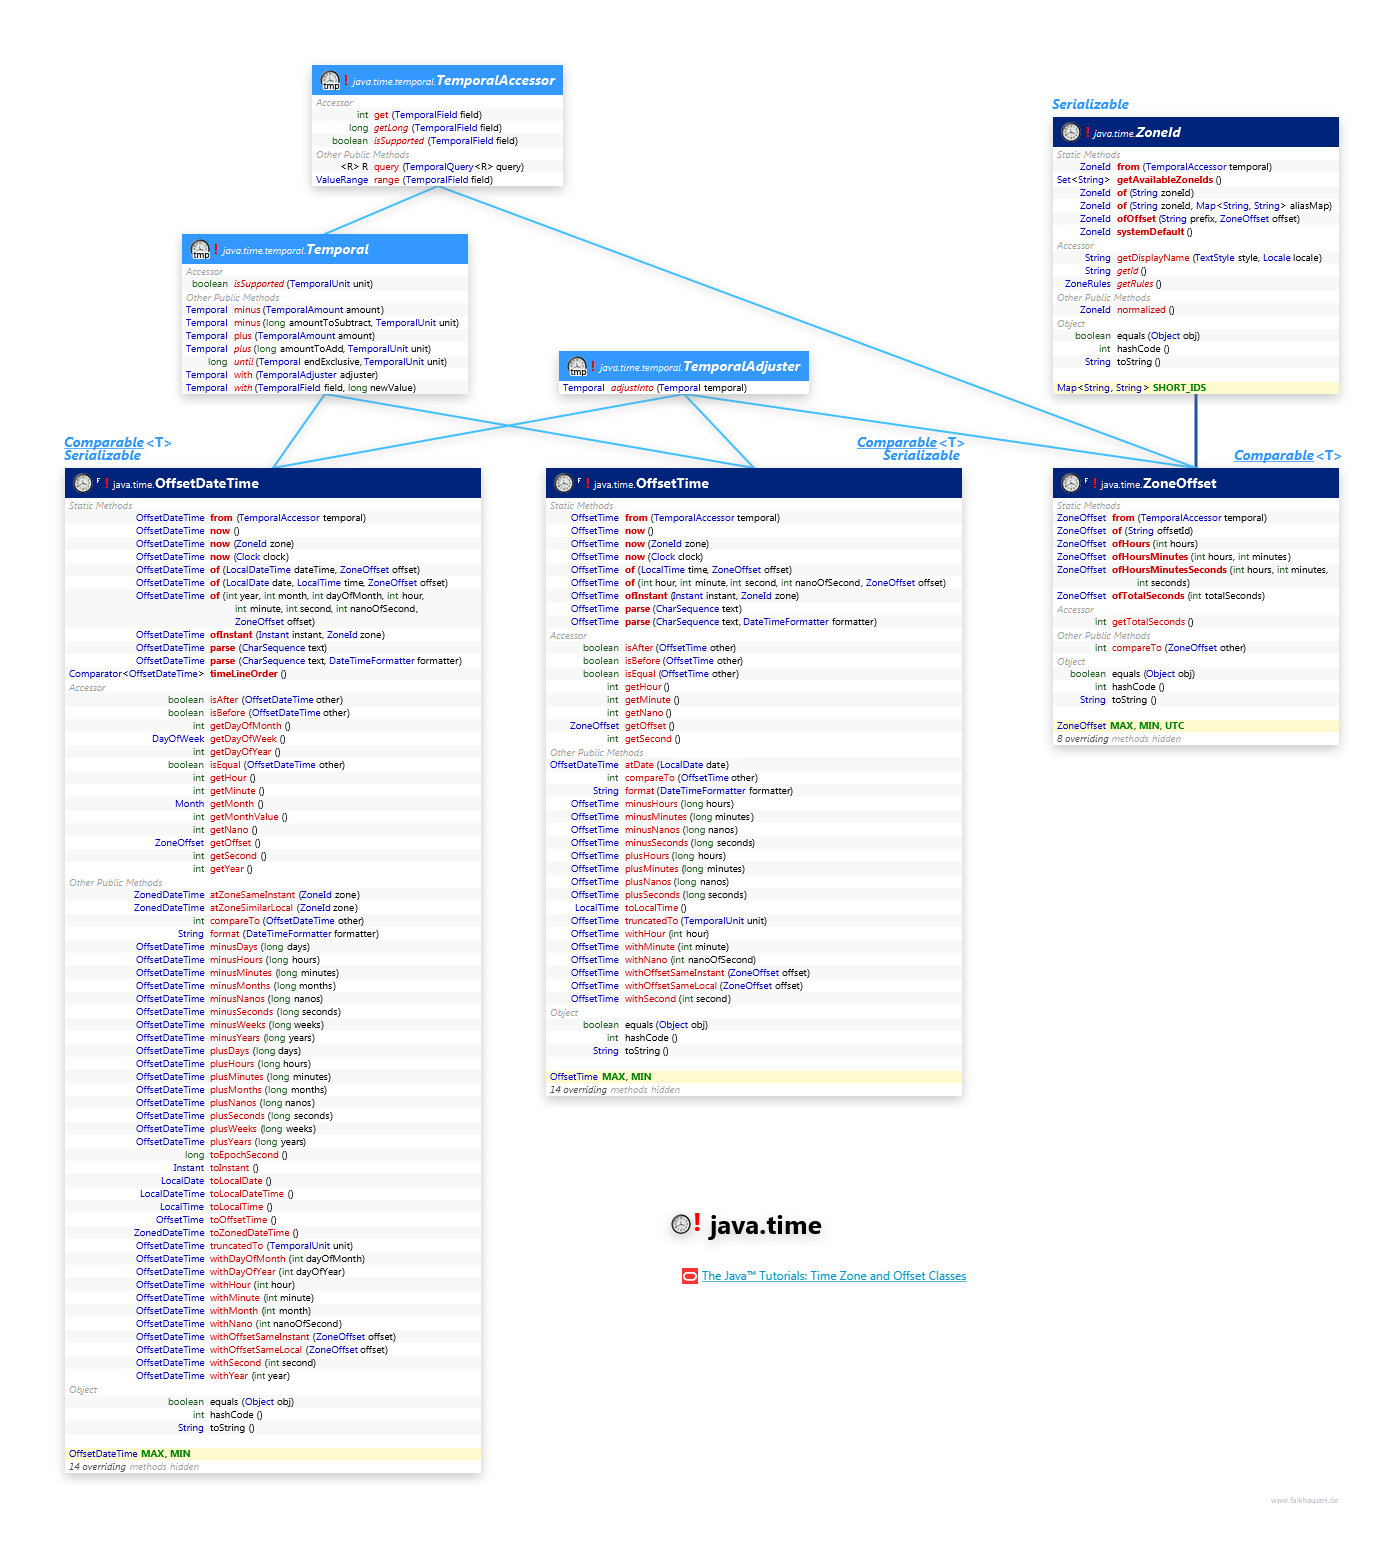 java.time Offset class diagram and api documentation for Java 8